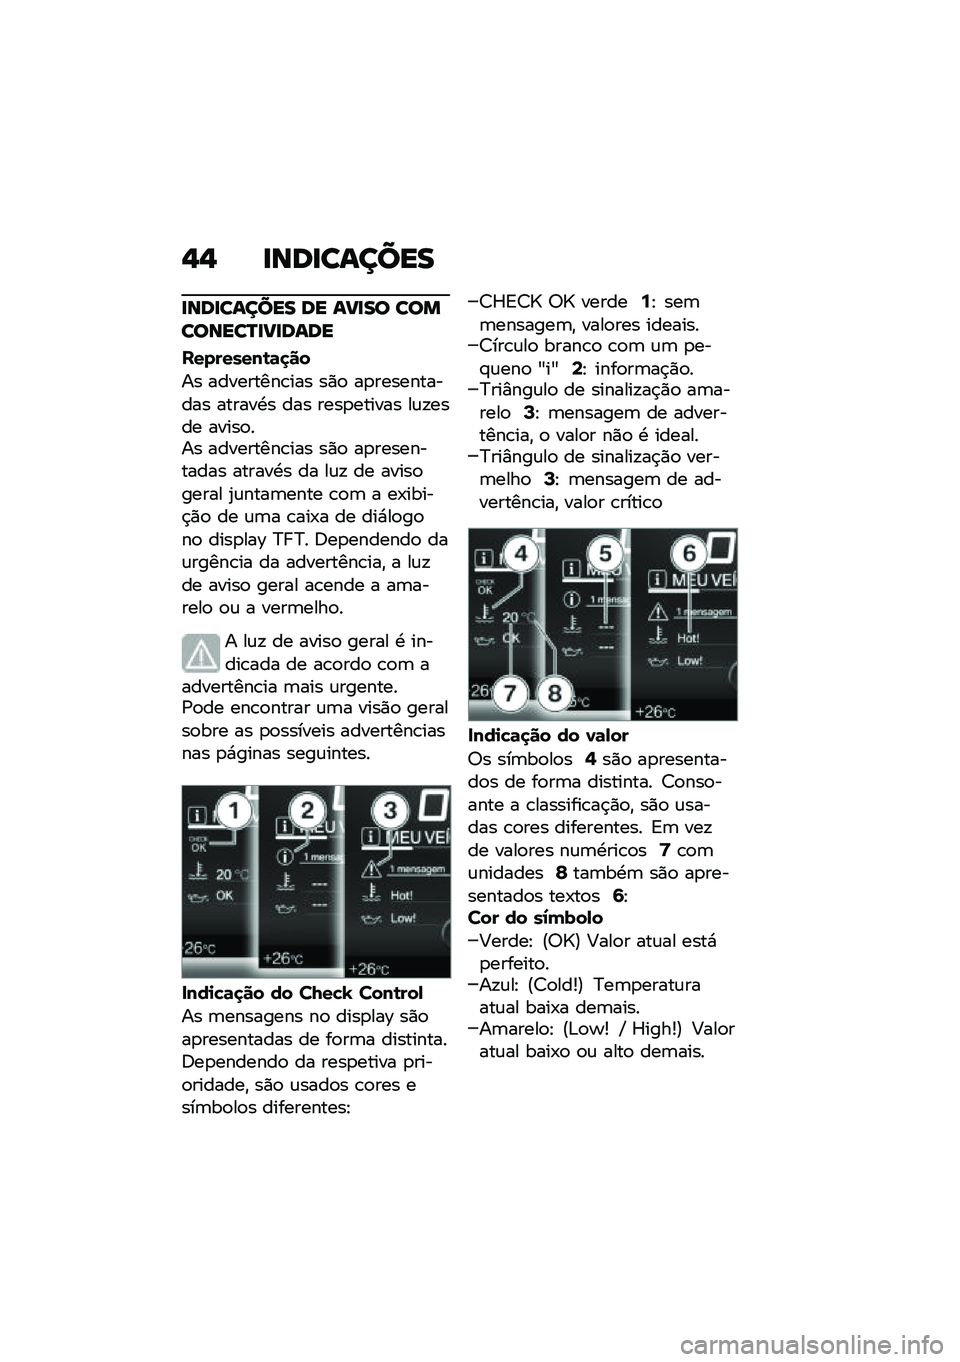 BMW MOTORRAD C 400 GT 2020  Manual do condutor (in Portuguese) �$�$ �
���
������
�
���
������ �� ���
�� ���������P�
��
����
���������\b�	�
��
�� ���������\b��� ��)�
 ��
����������� ������